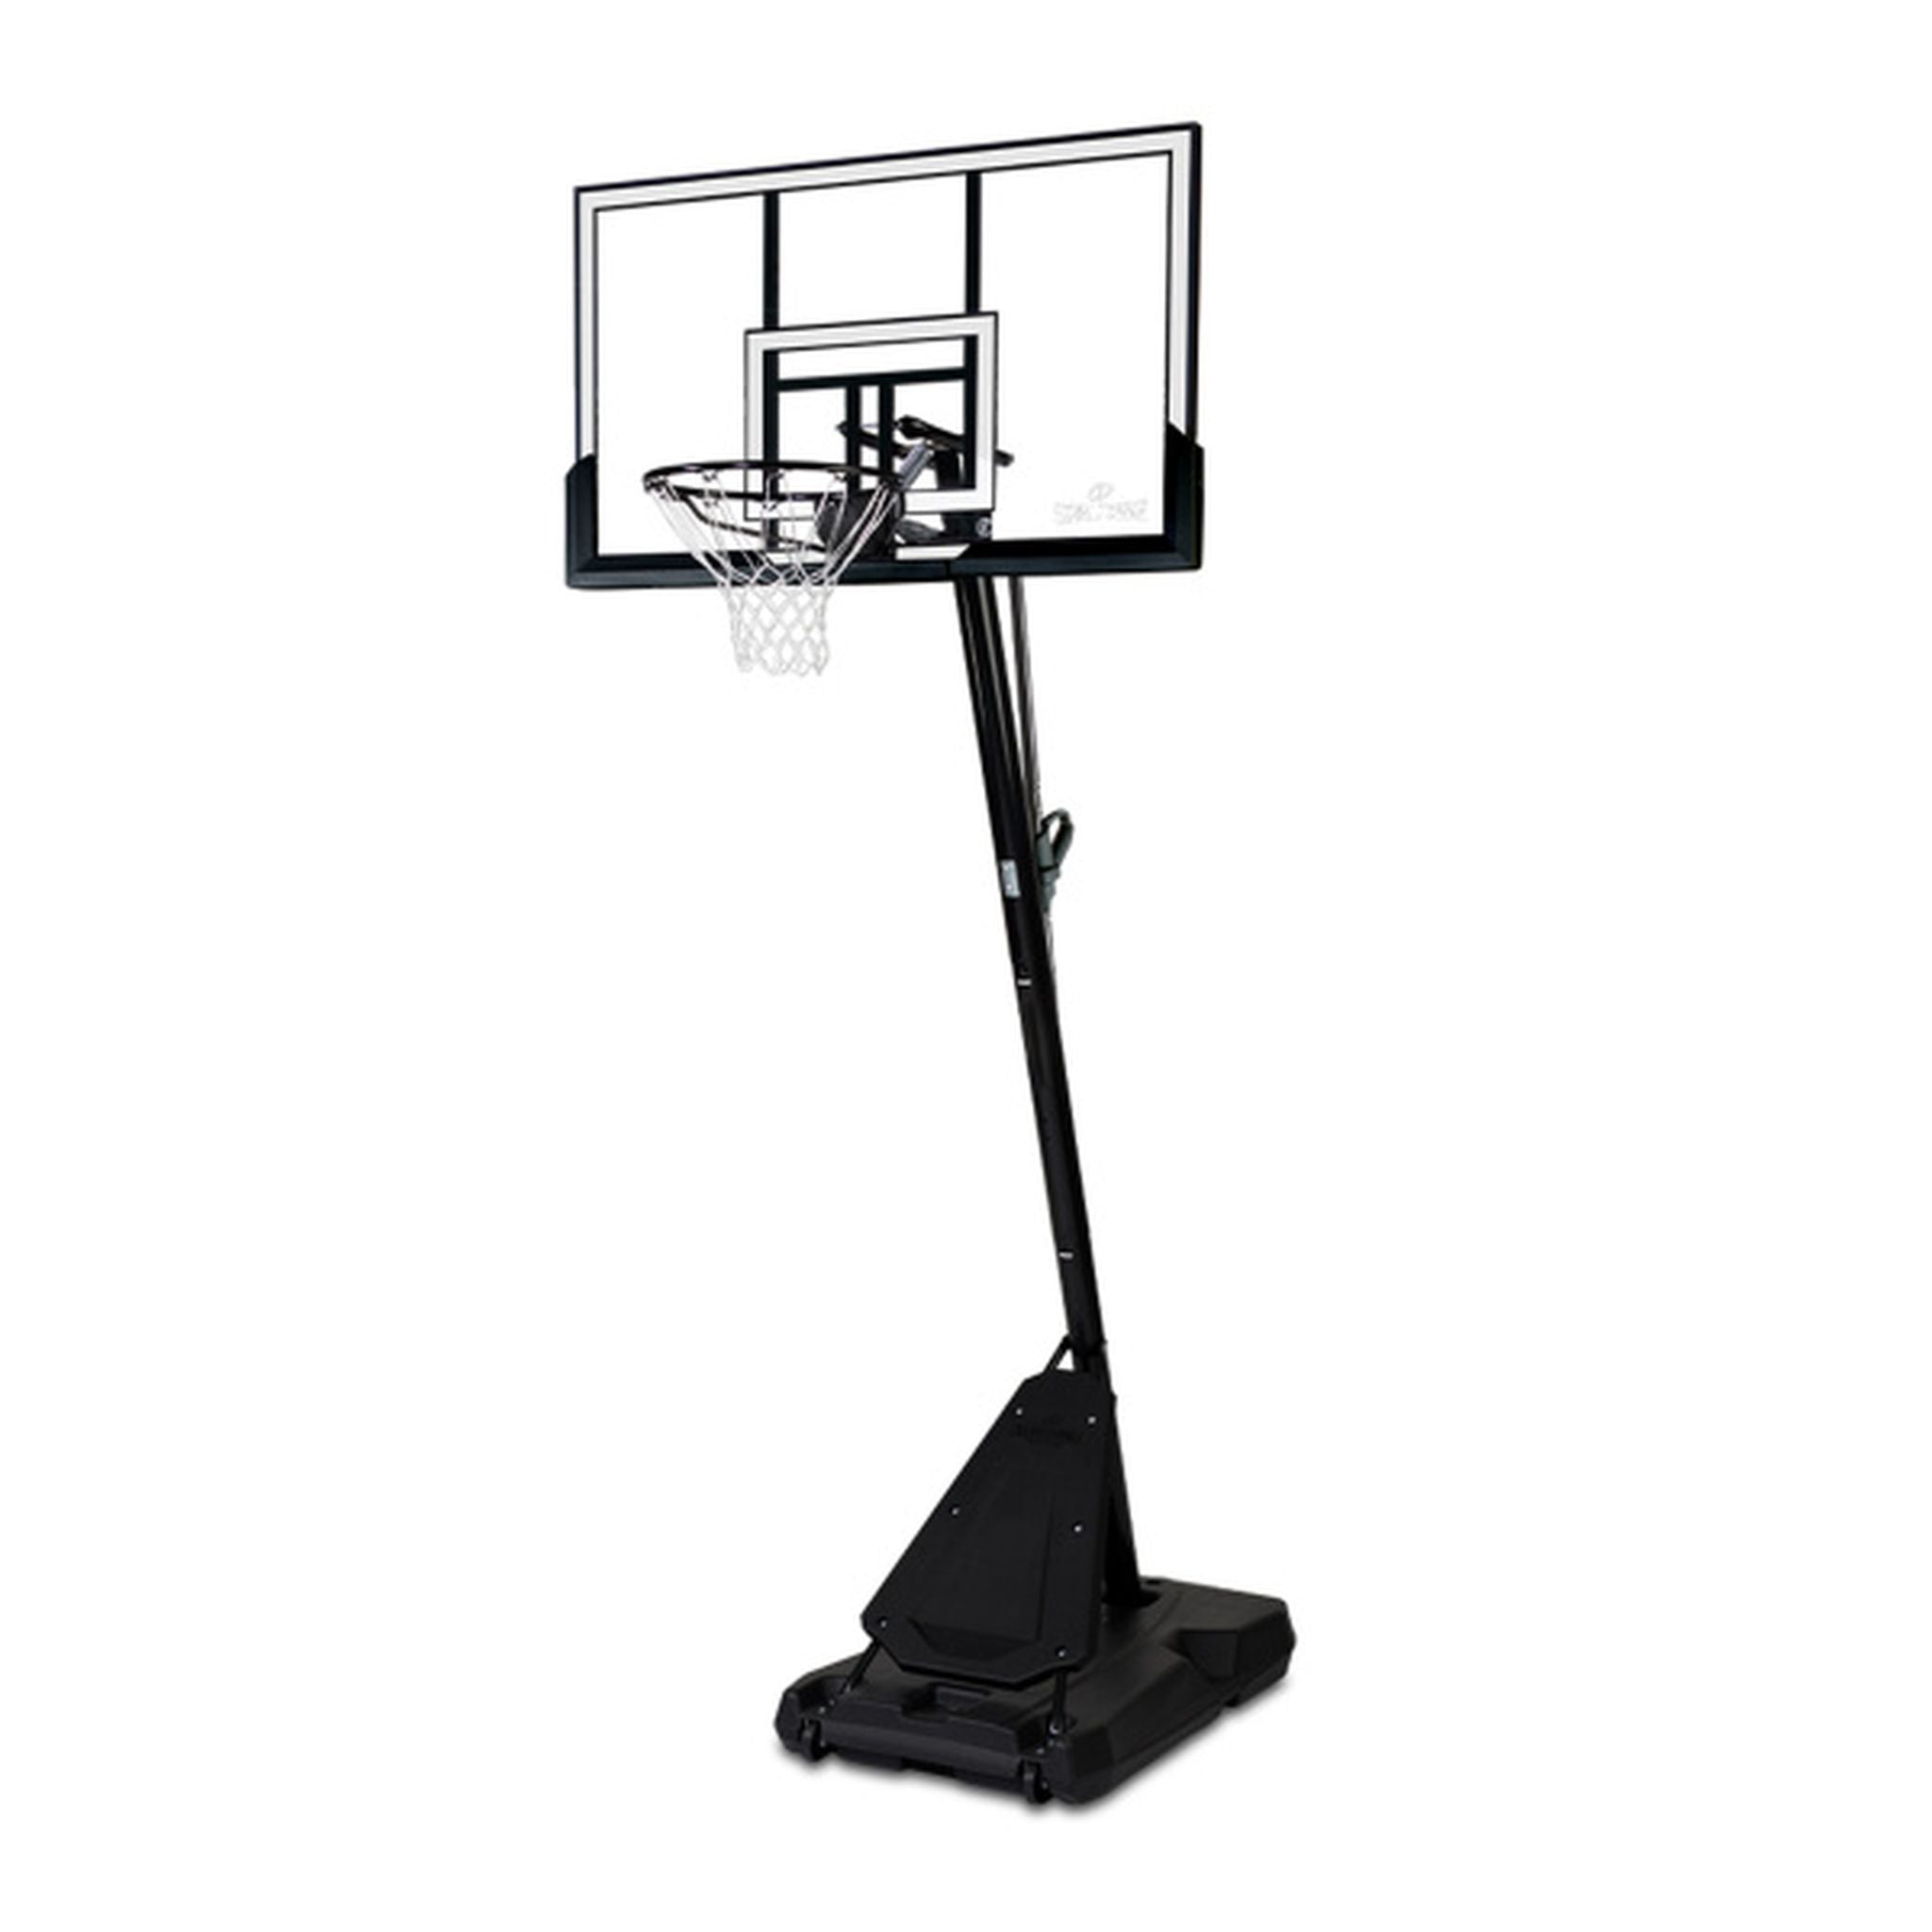 Spalding 52-inch Platinum Acrylic Portable Basketball System